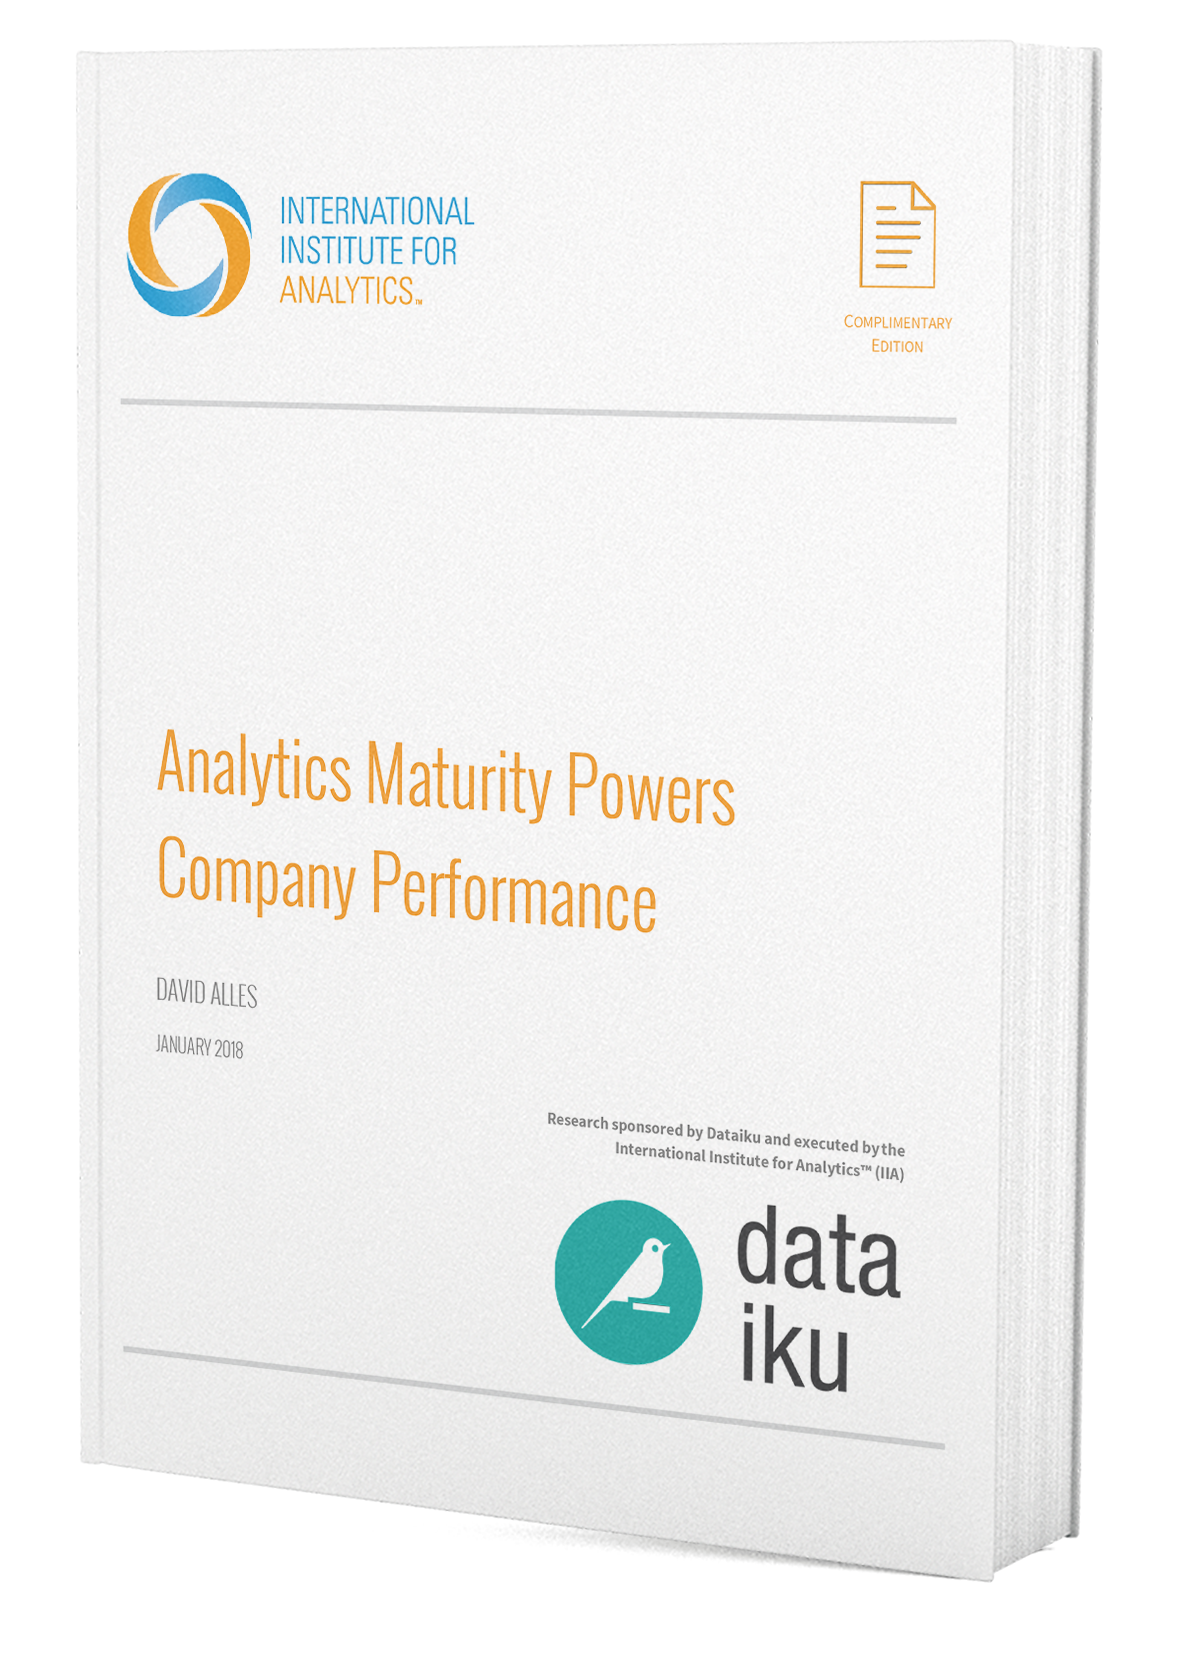 DAT_Analytics+Maturity+Powers+Company+Performance_3D+Book+Mockup